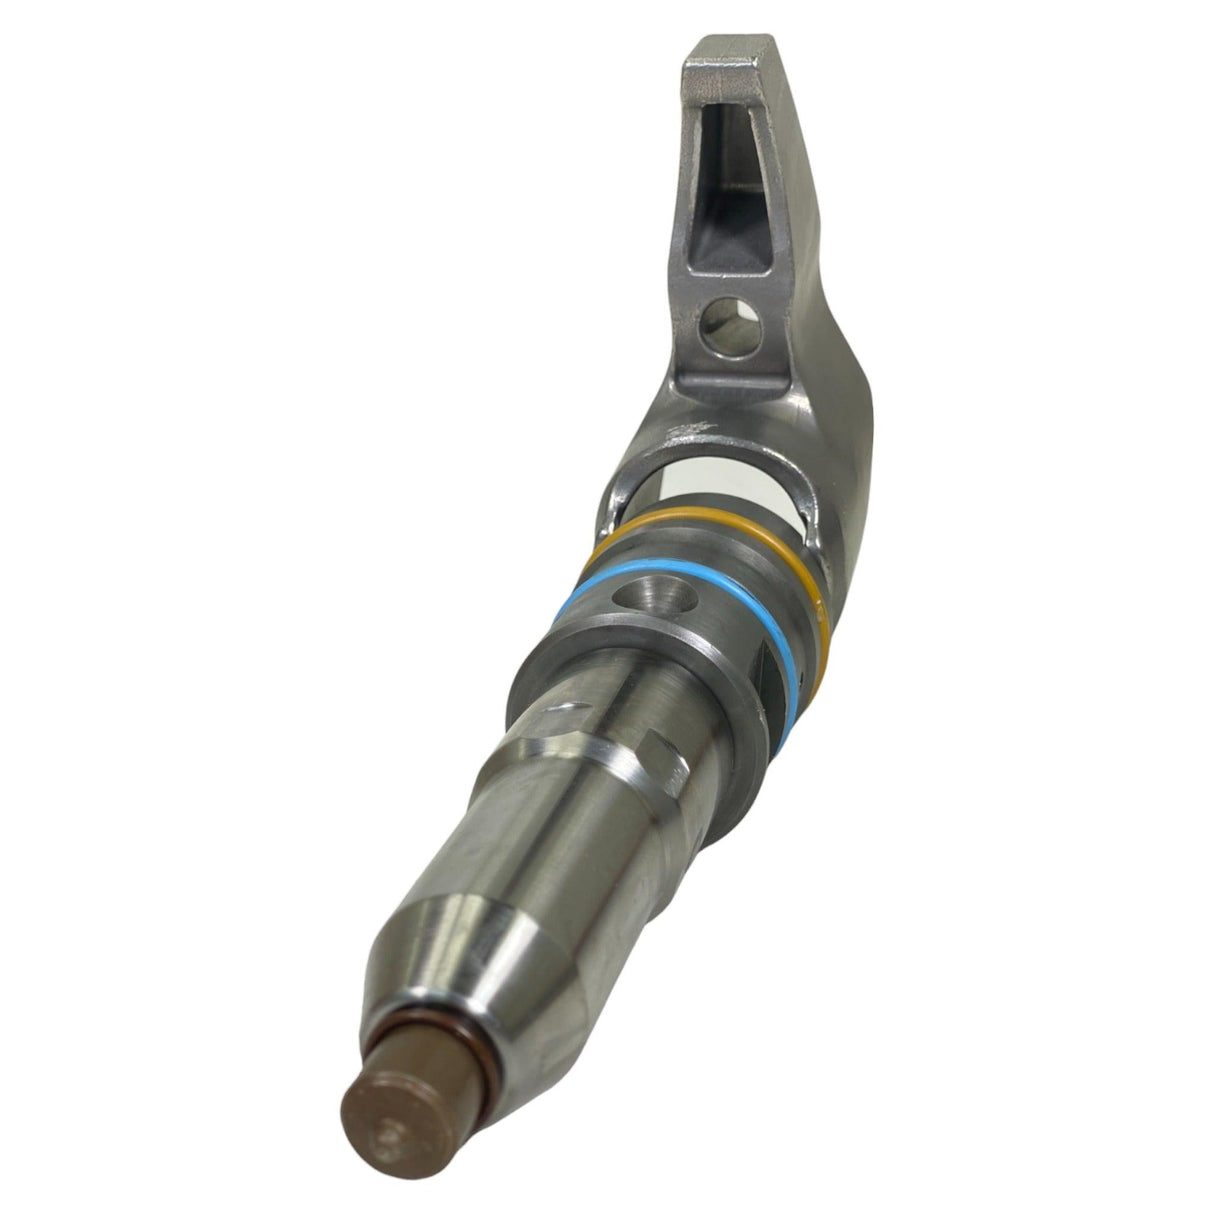 20R-5566 Genuine Cat Fuel Injector For C175-16 C175-20 C175-16.